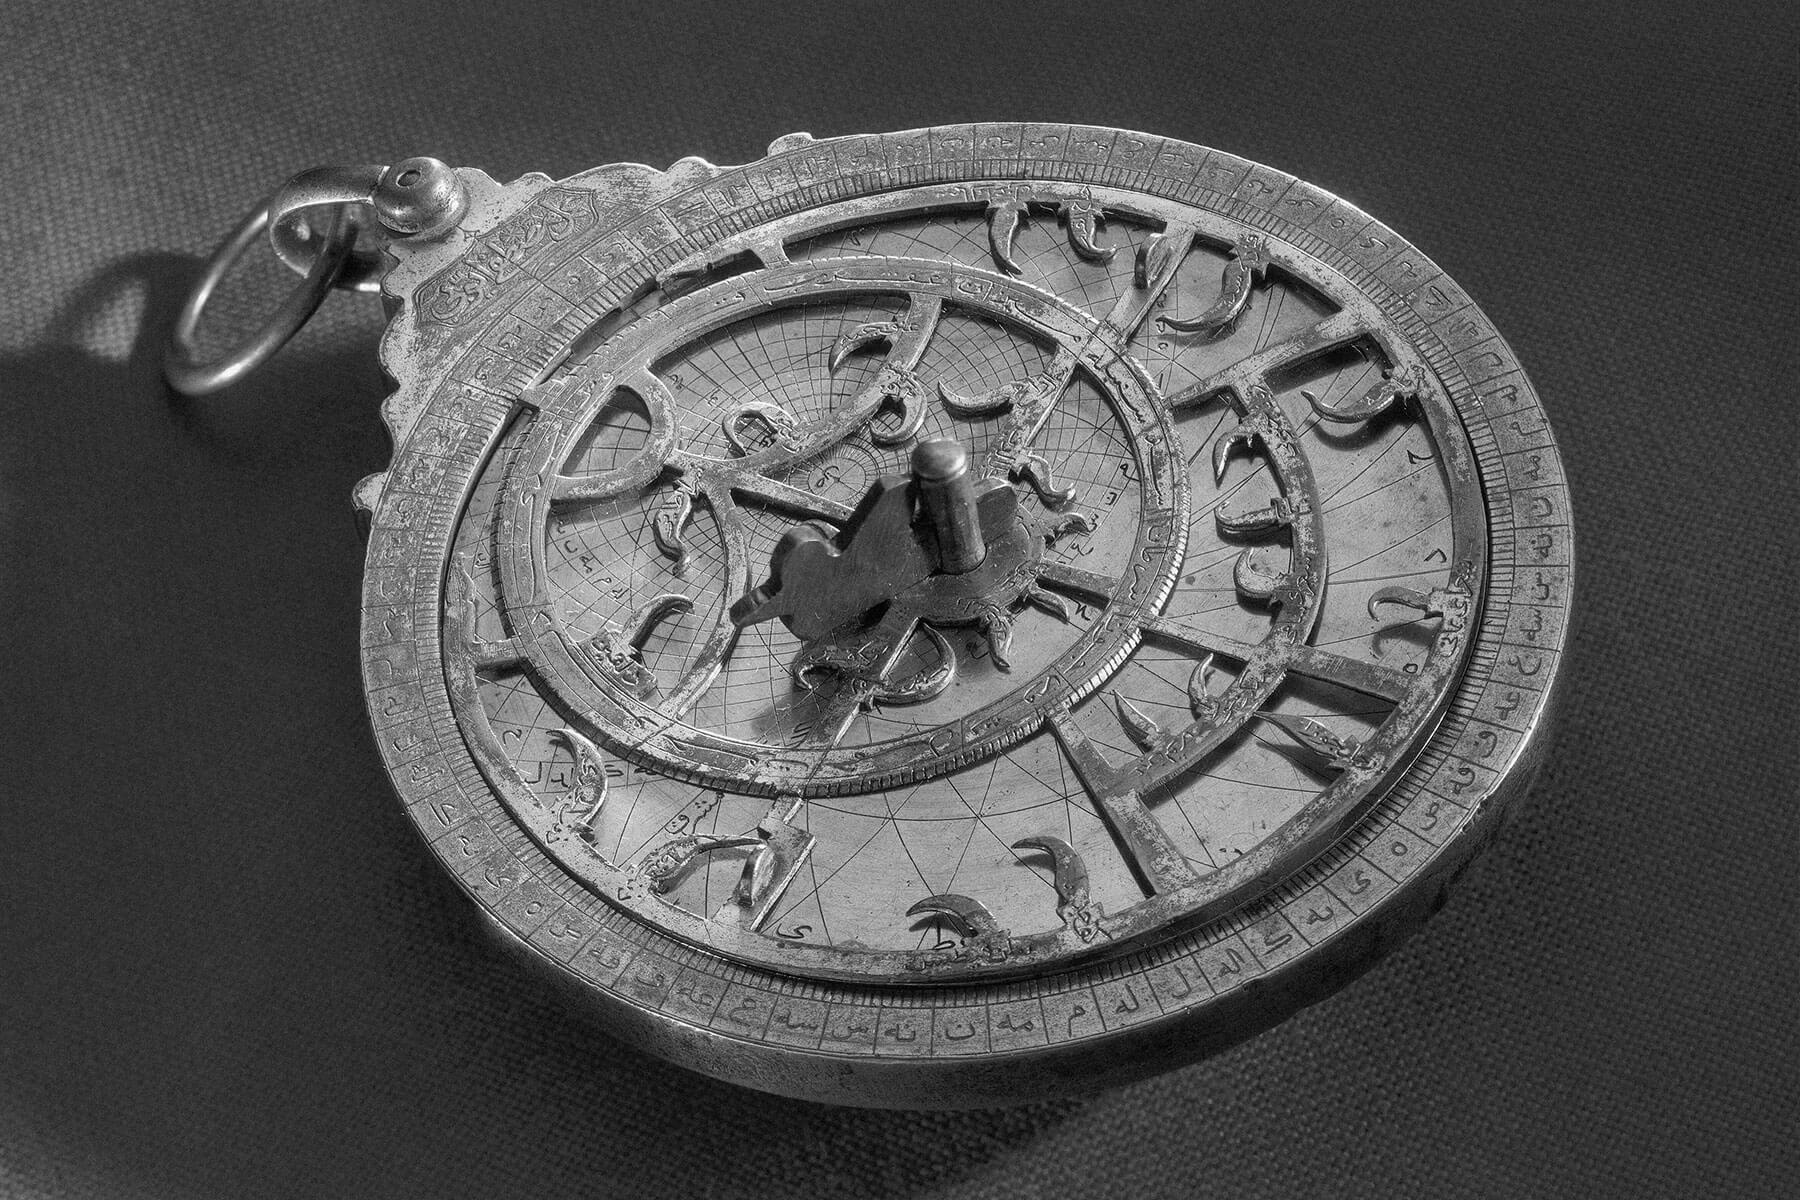 An astrolabe